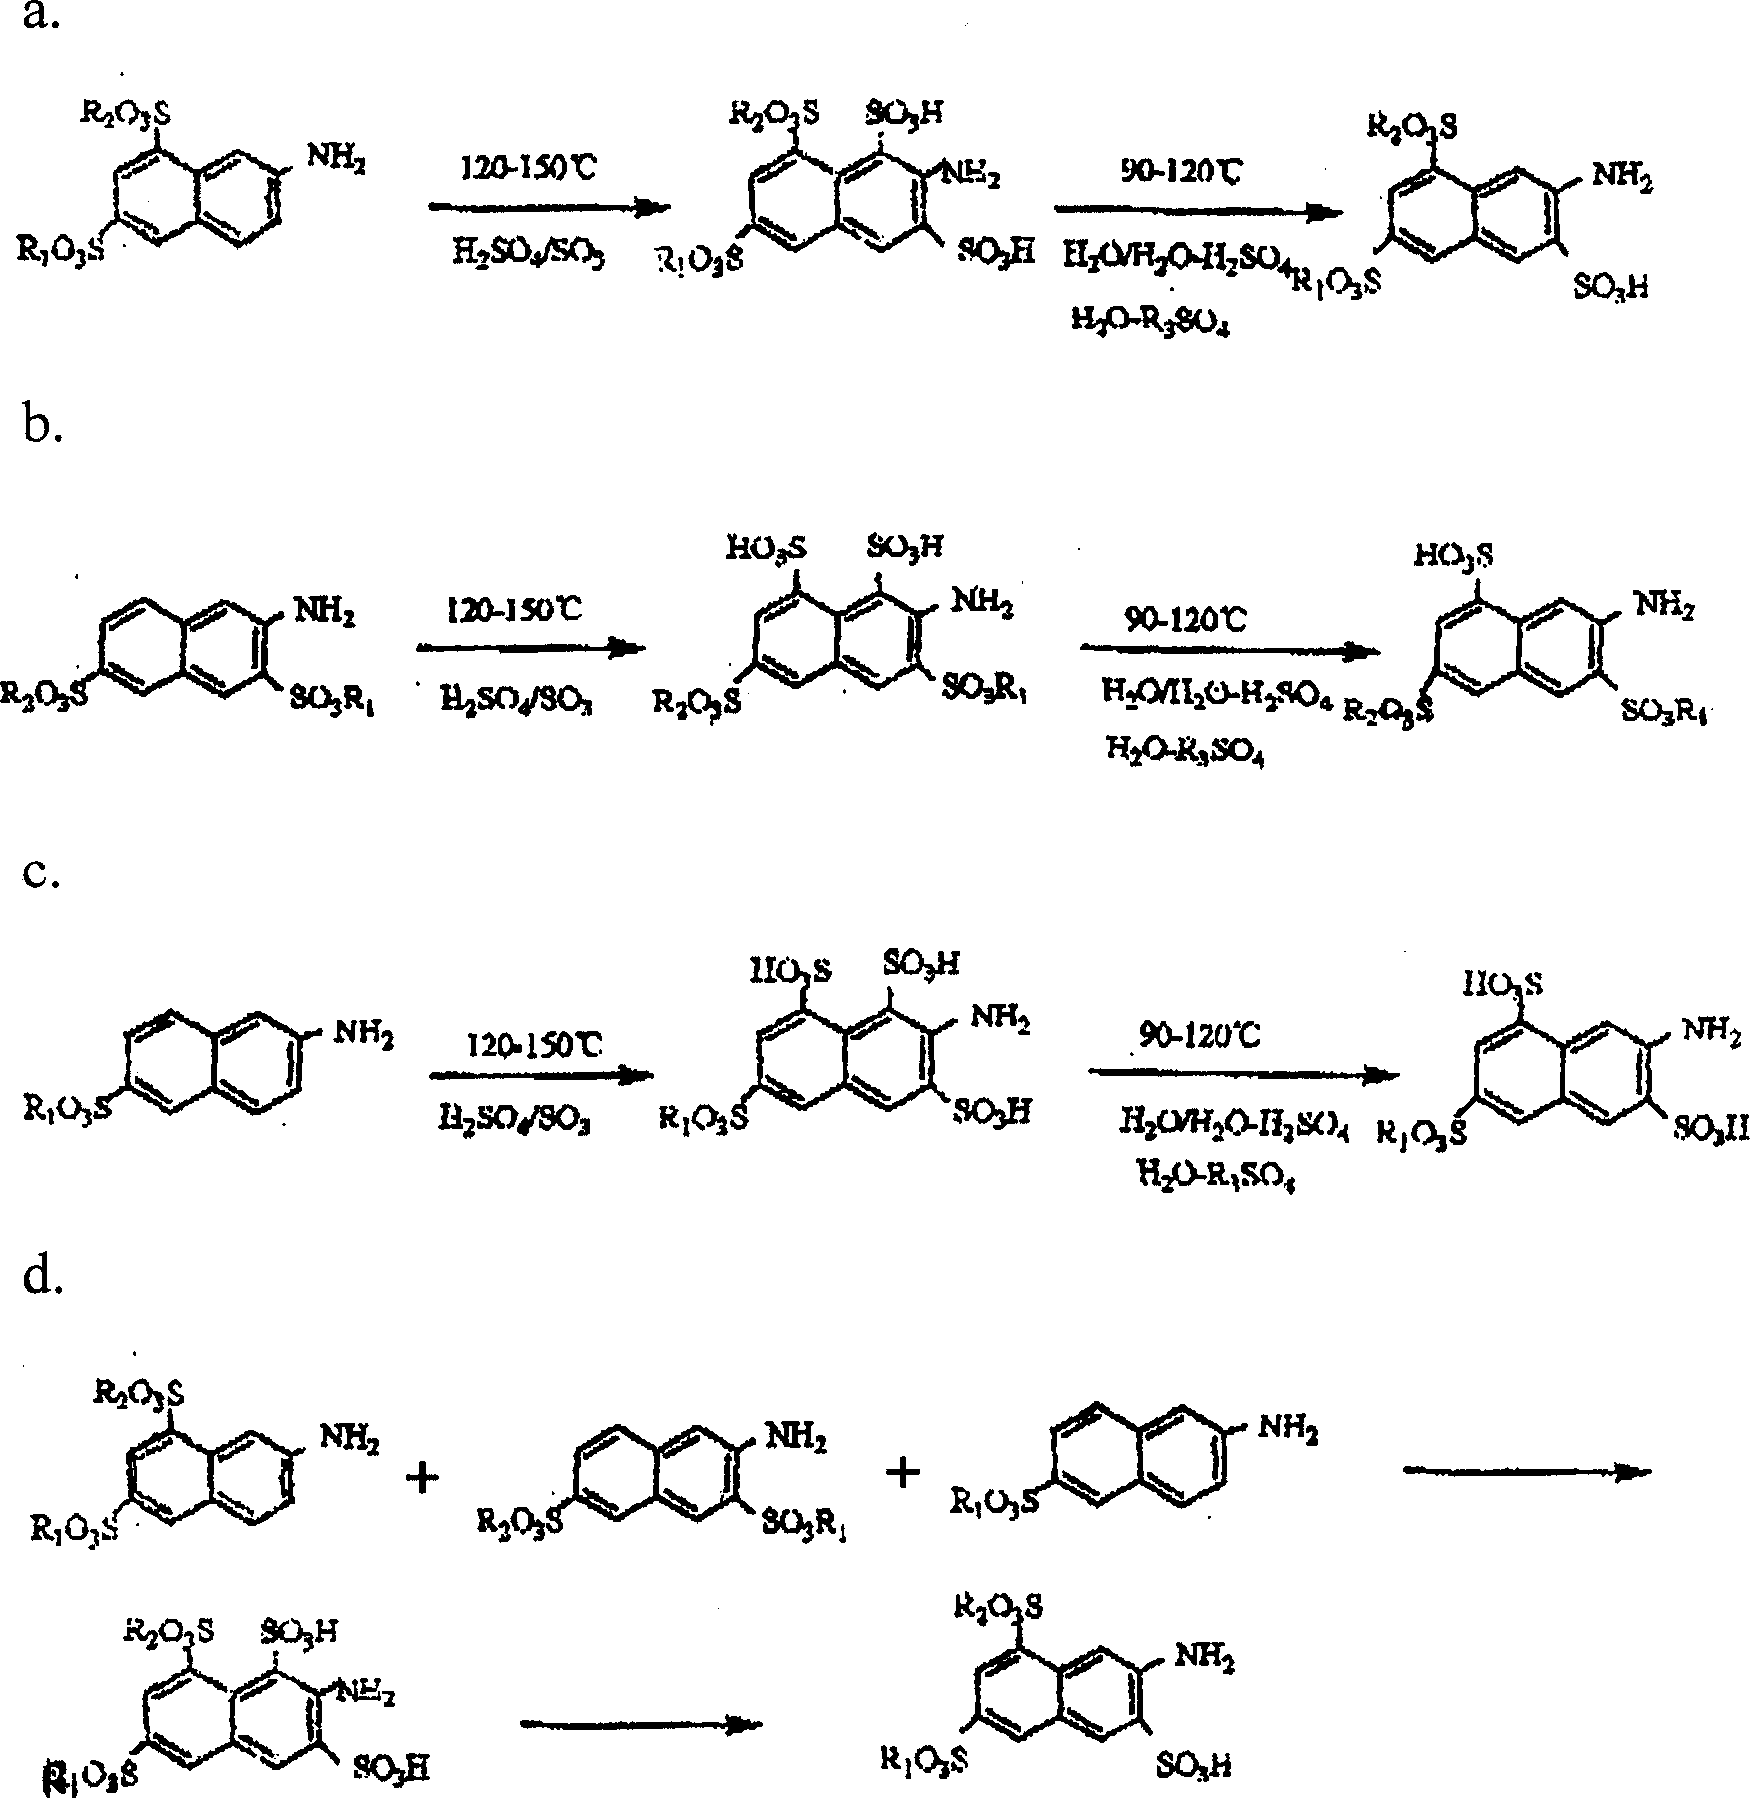 Prepn of 2-naphthylamine-3,6,8-trisulfonic acid